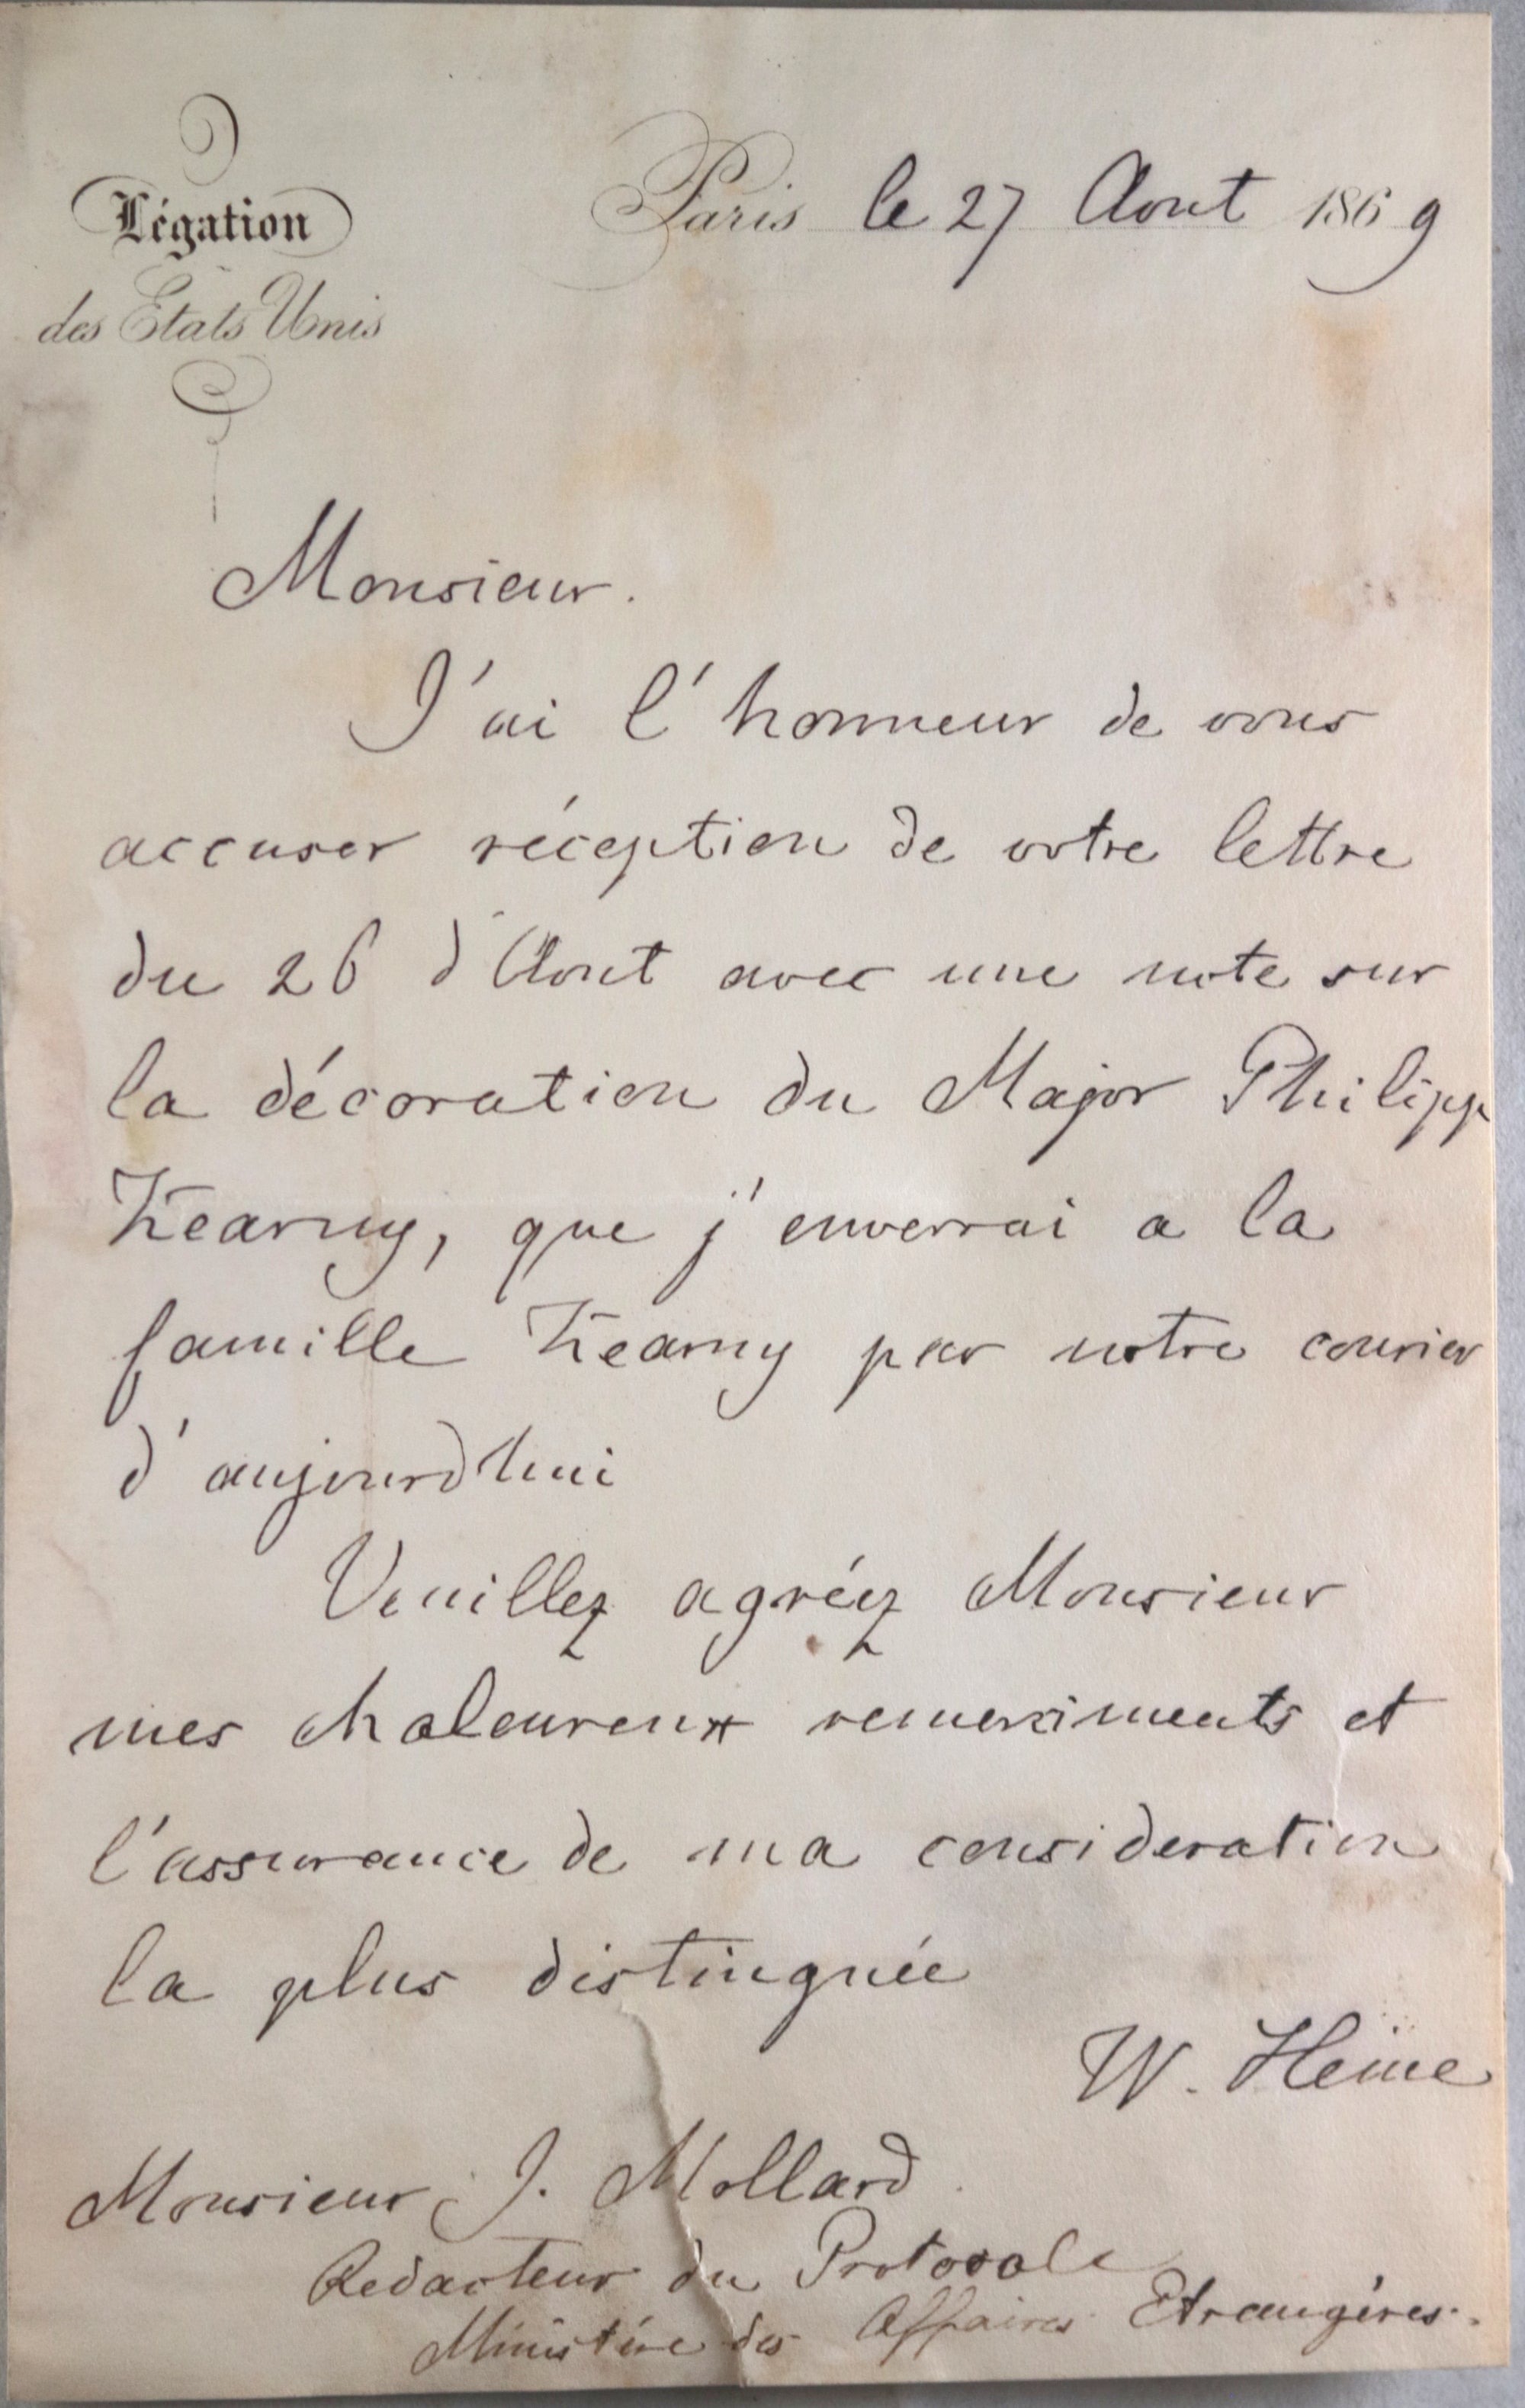 1869 french letter regarding American military hero Philip Kearney